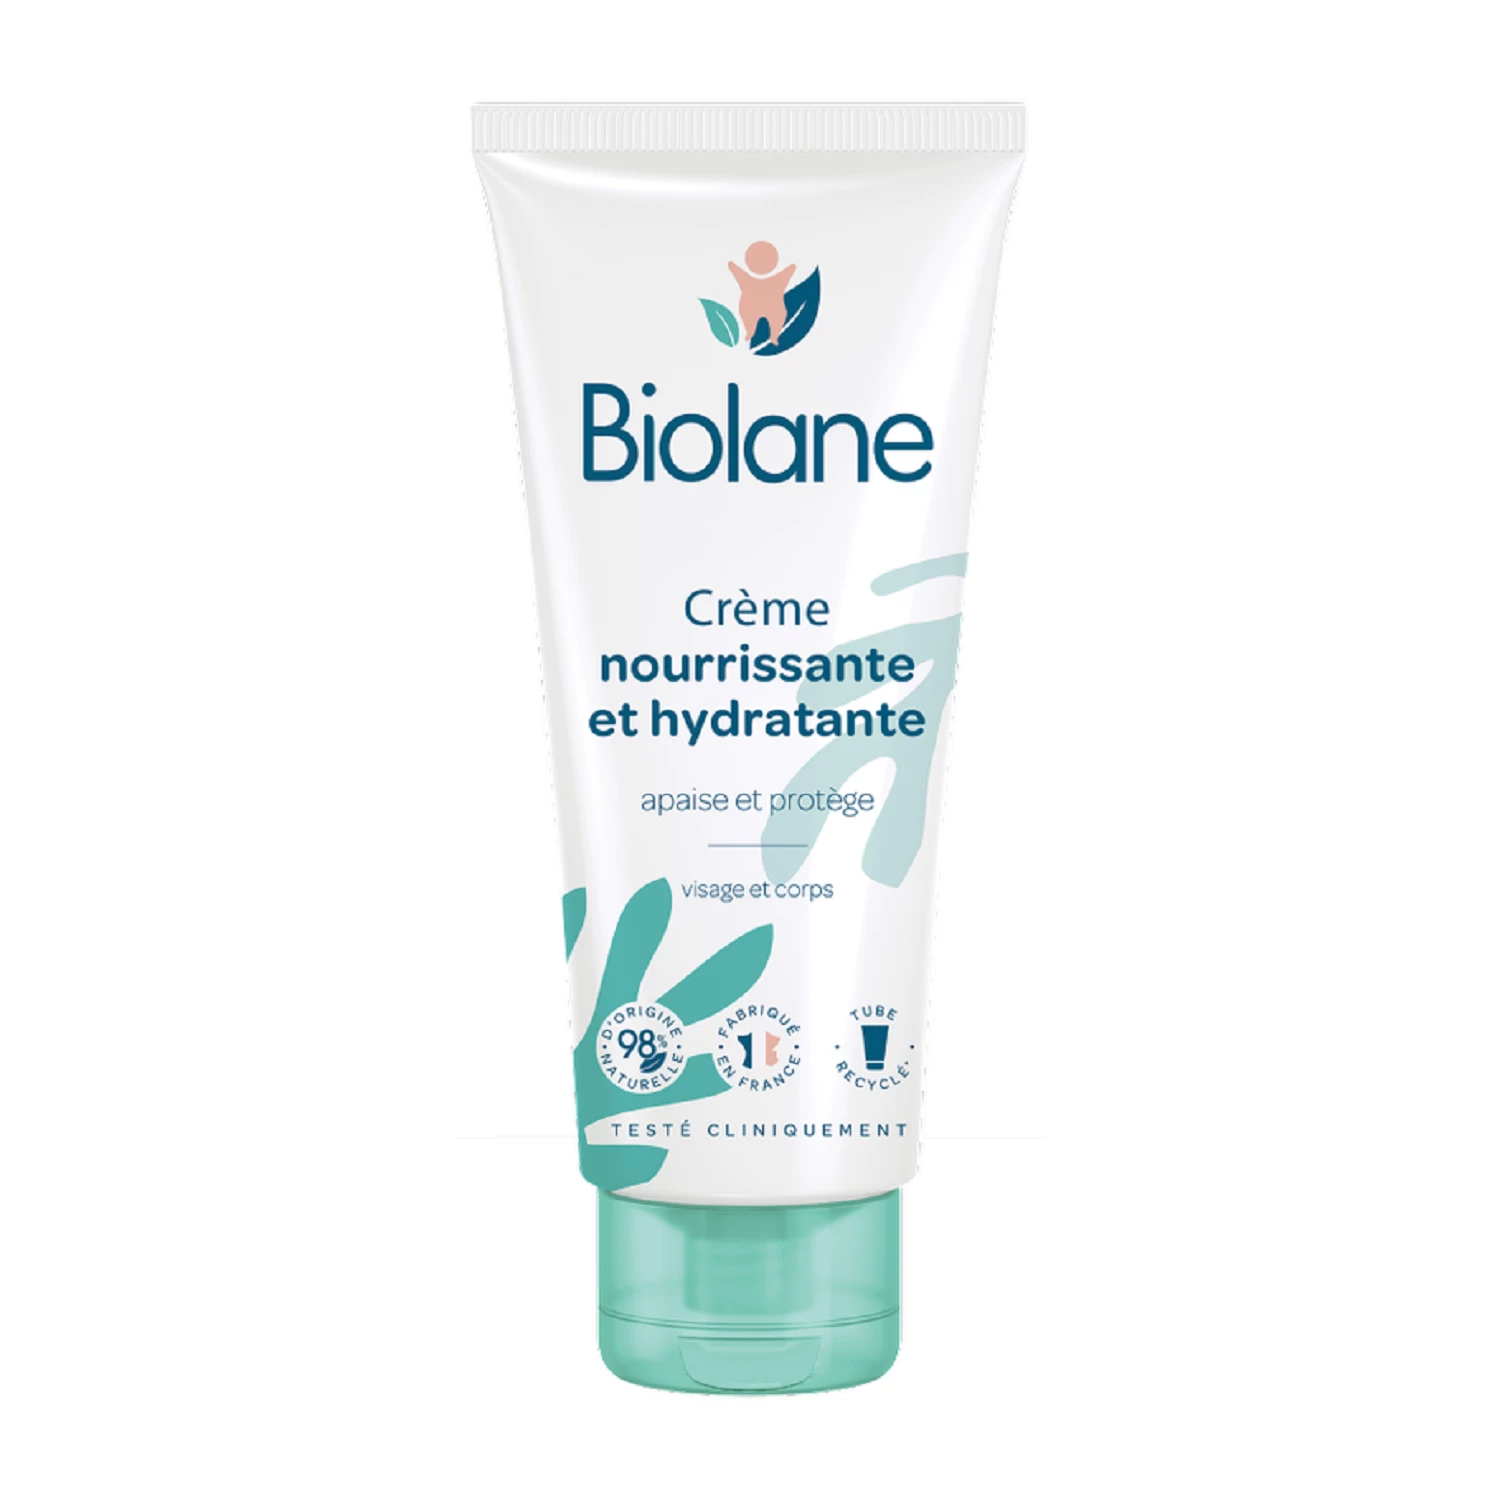 Nourishing and moisturizing face and body cream 100ml - BIOLANE